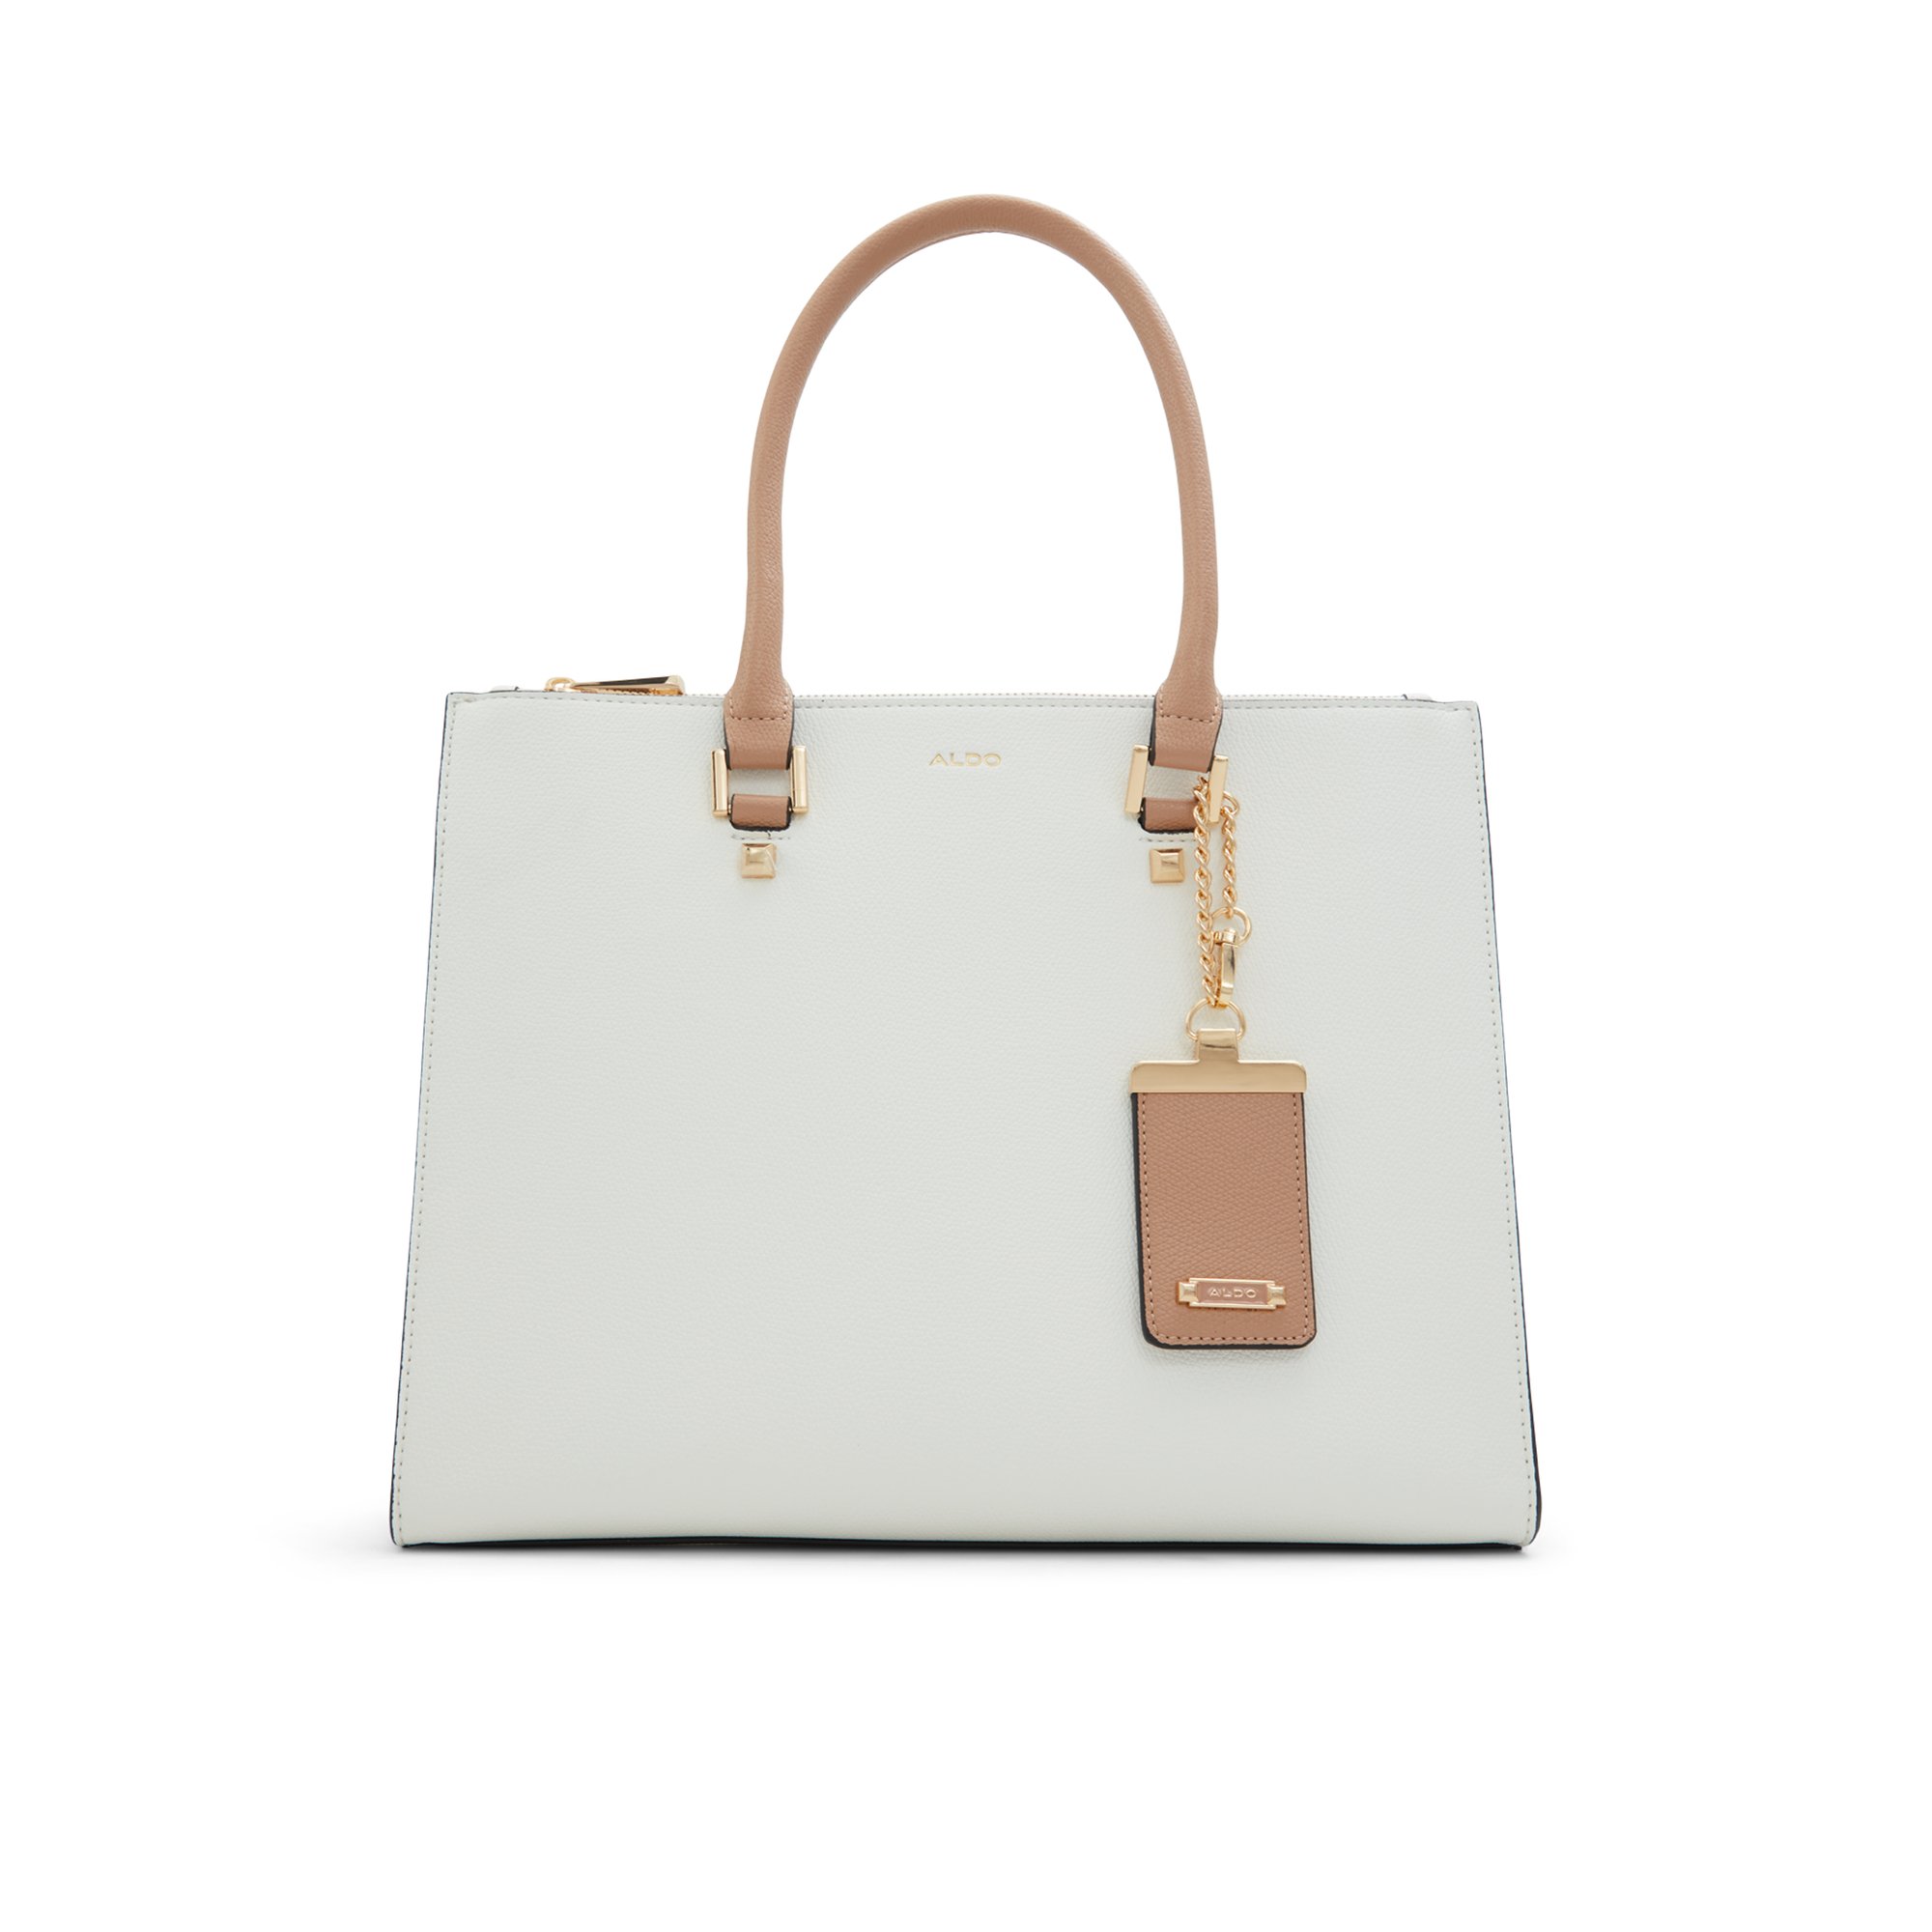 ALDO Orarii - Women's Tote Handbag - White